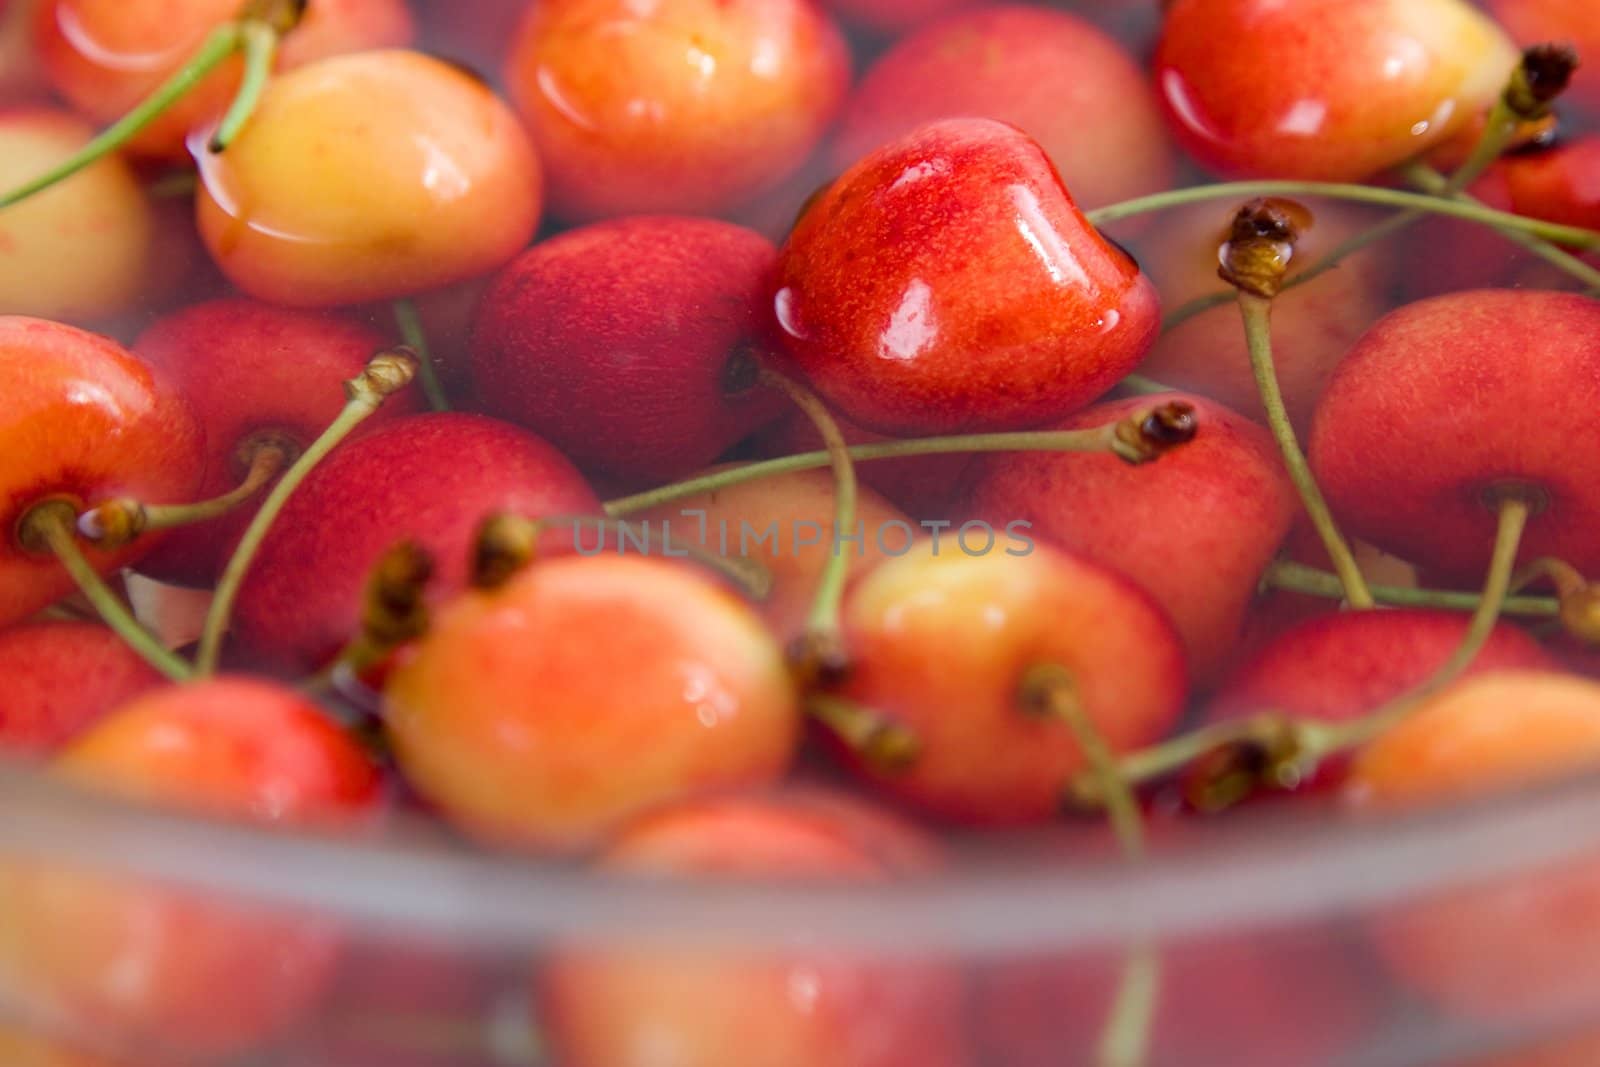 cherries in water by amaxim